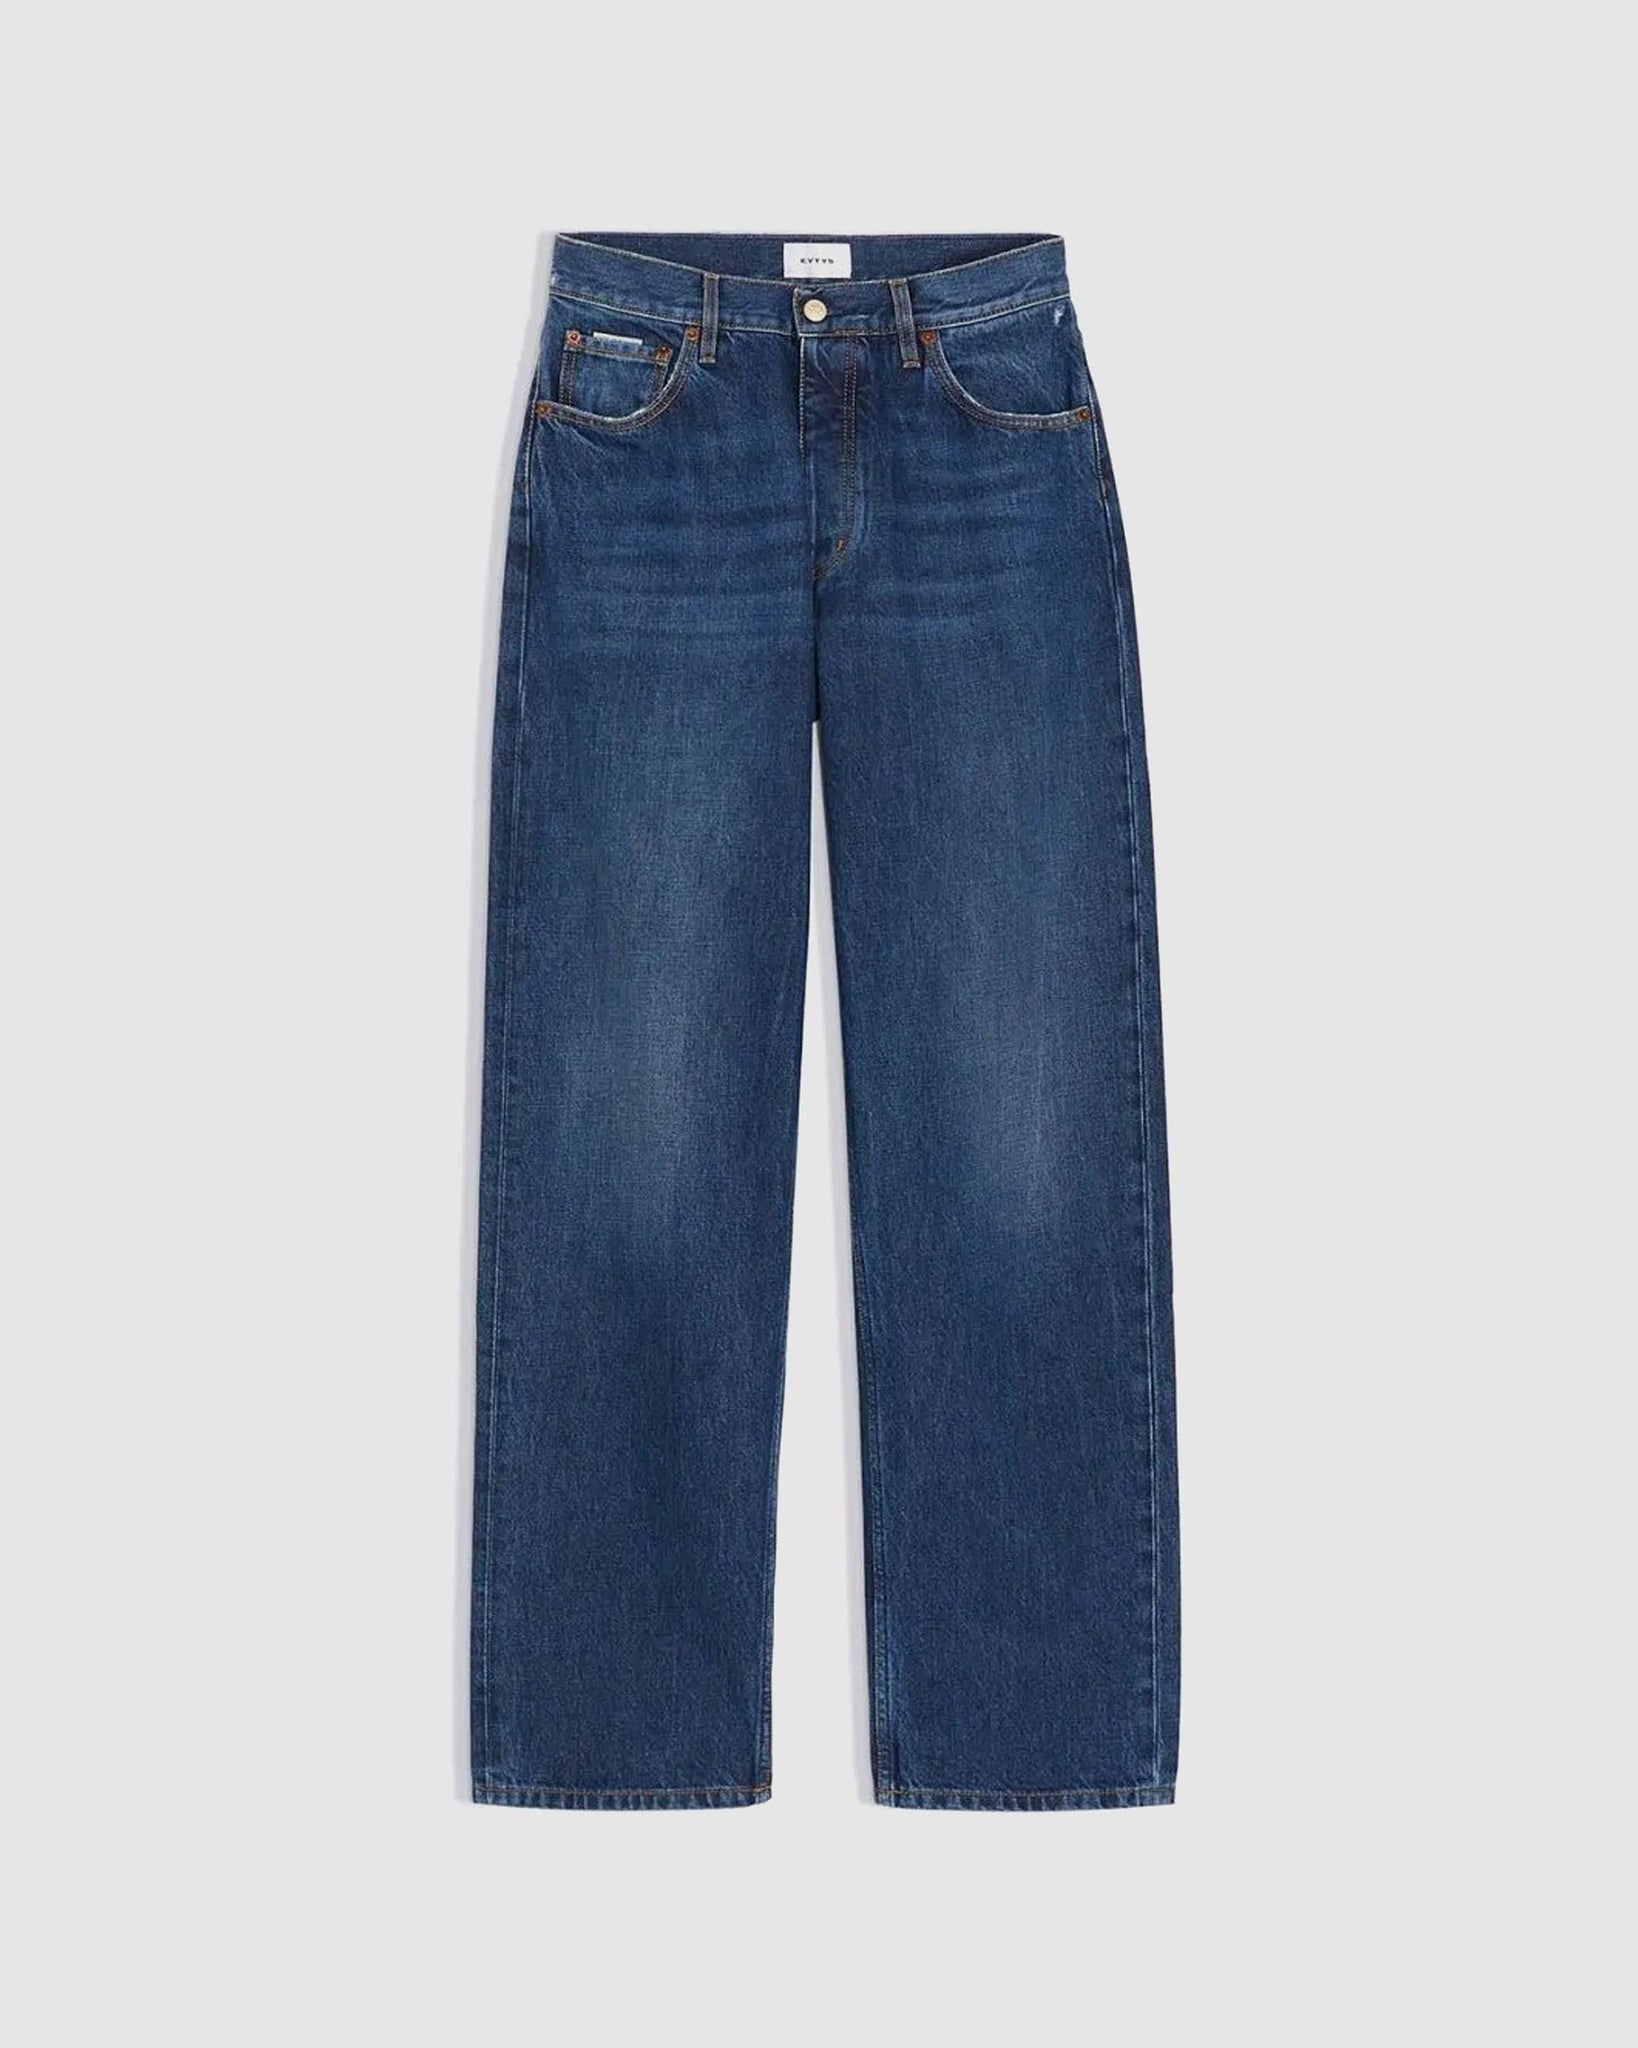 Benz Dark Indigo Jeans - {{ collection.title }} - Chinatown Country Club 